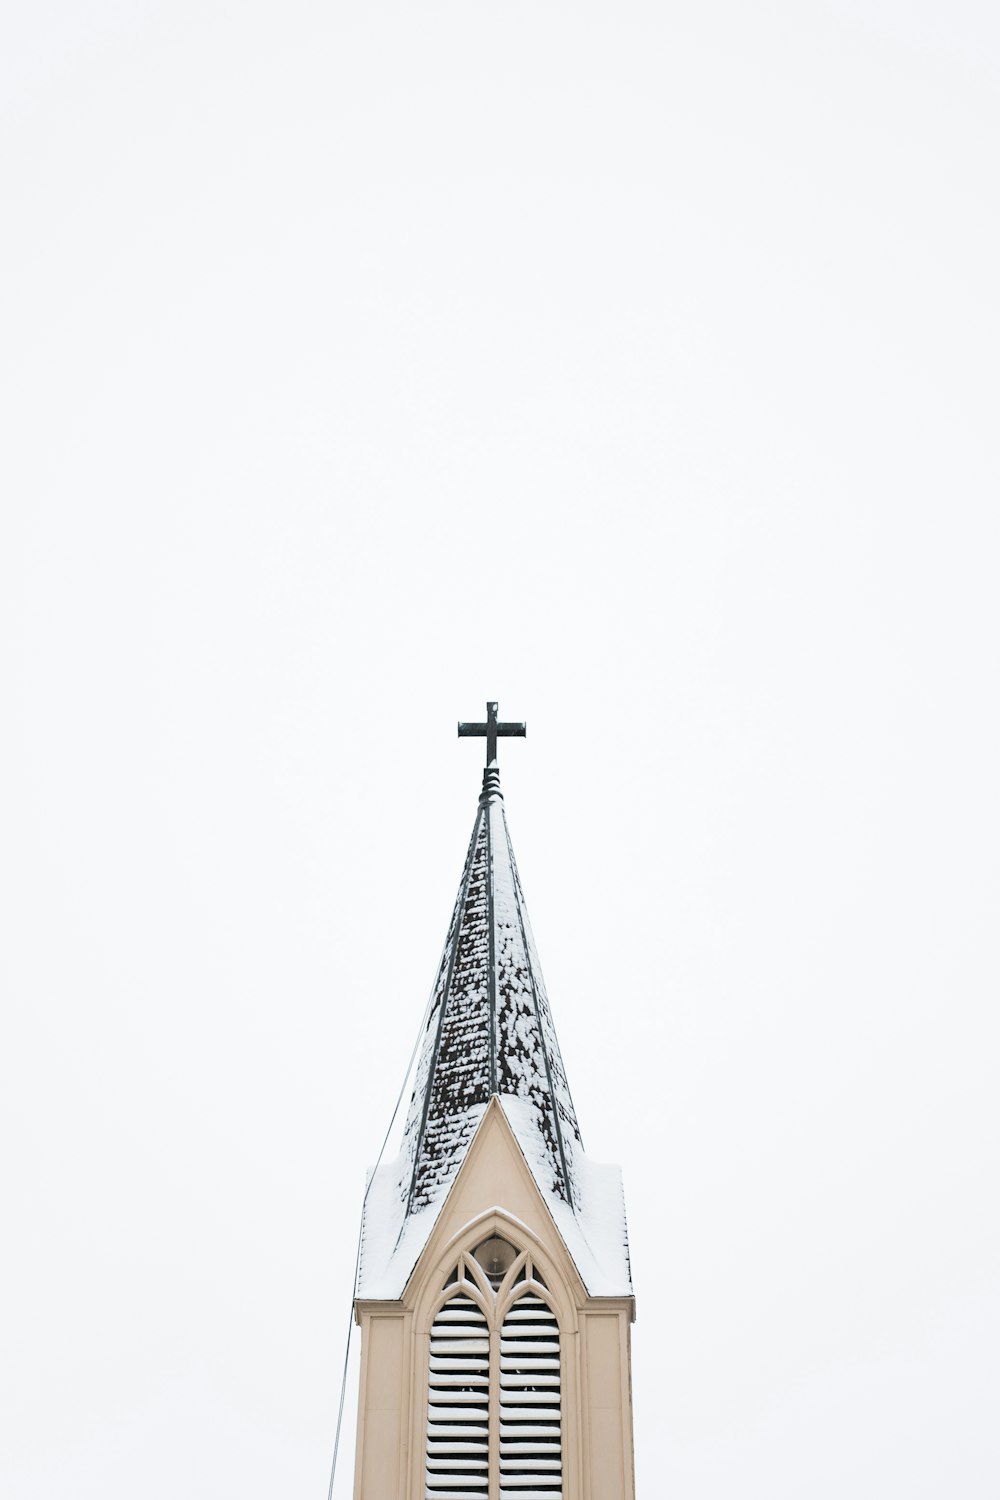 Torre da igreja bege e branca com cruz